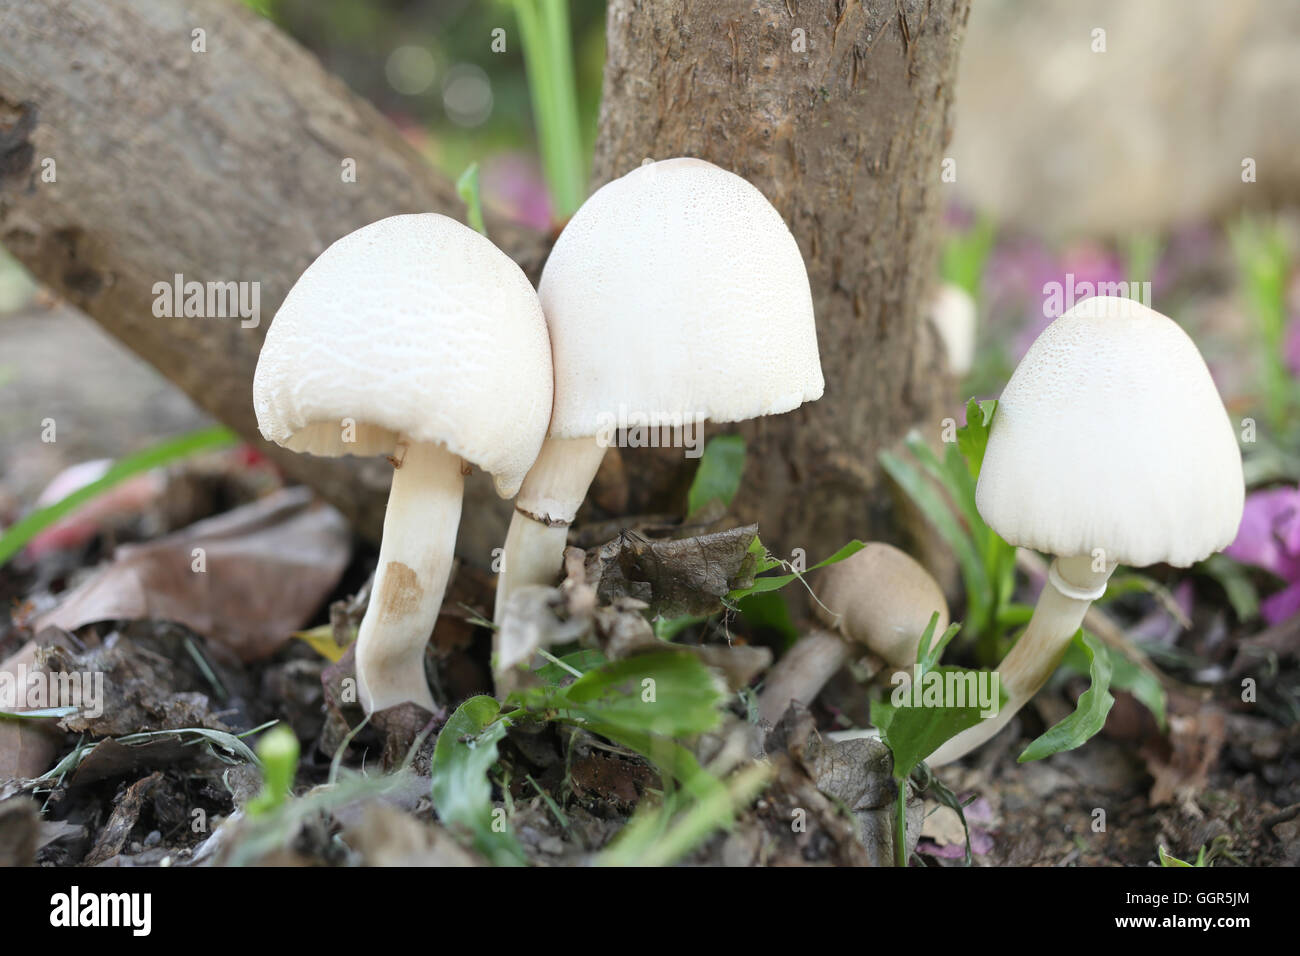 Giftige Pilze wachsen unter den Bäumen im Garten. Stockfoto